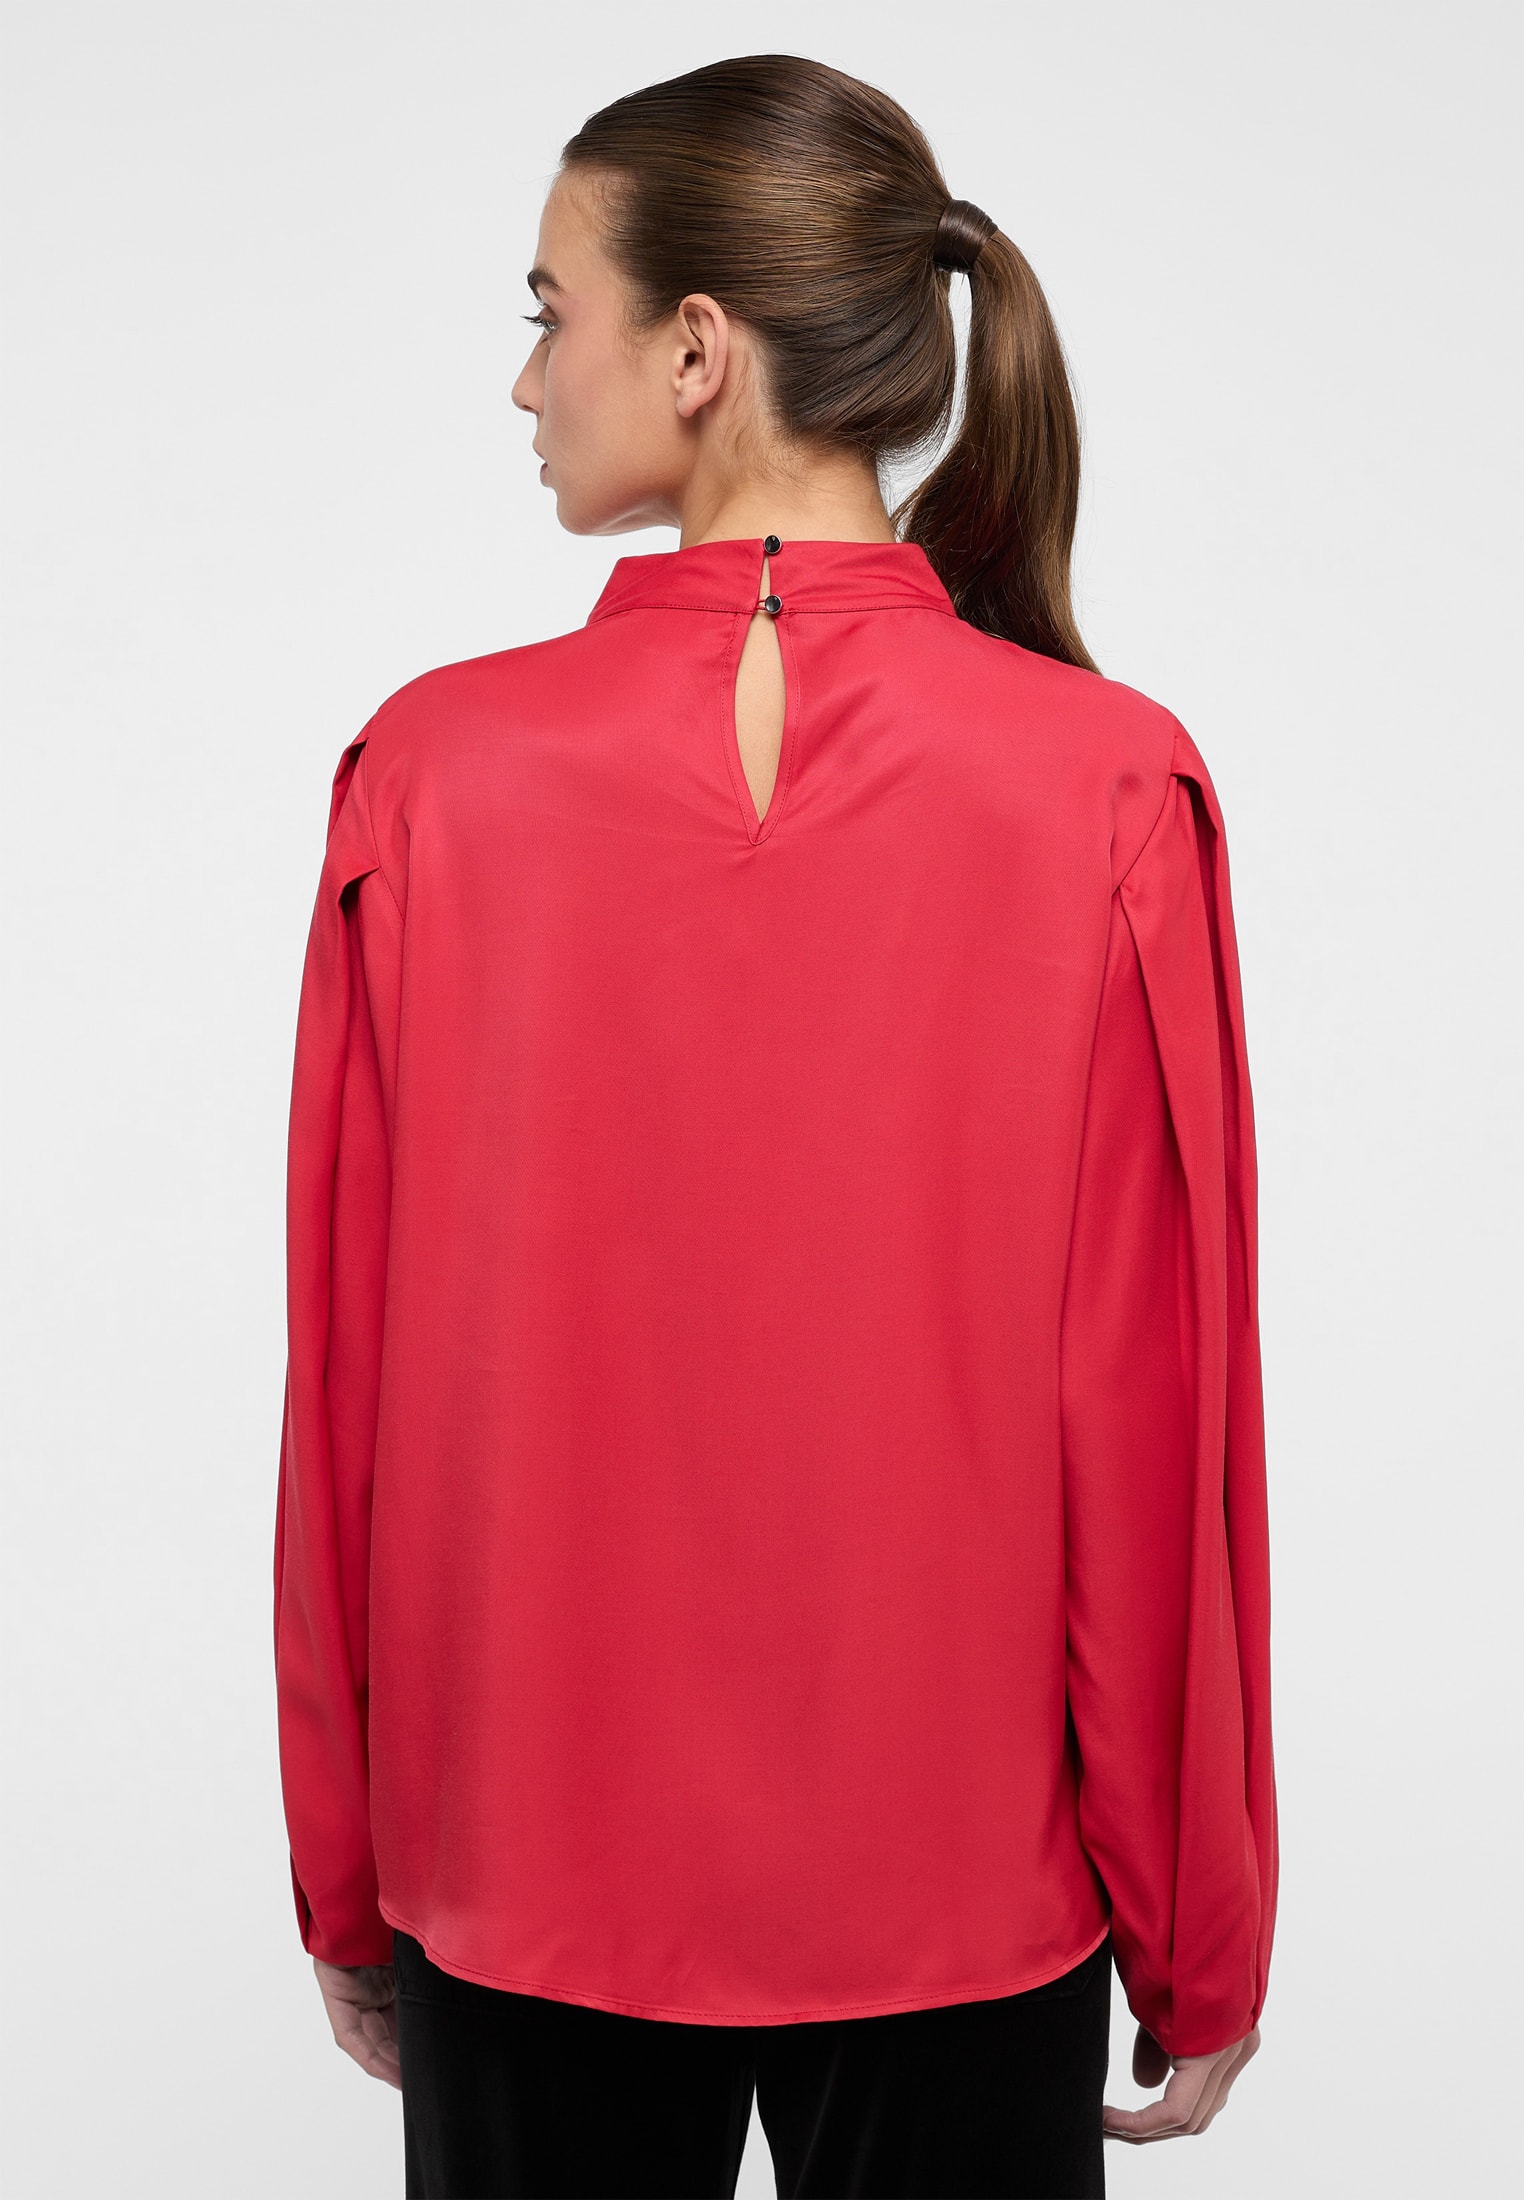 Viscose Shirt Bluse in rot unifarben | rot | Langarm | 42 |  2BL04288-05-01-42-1/1